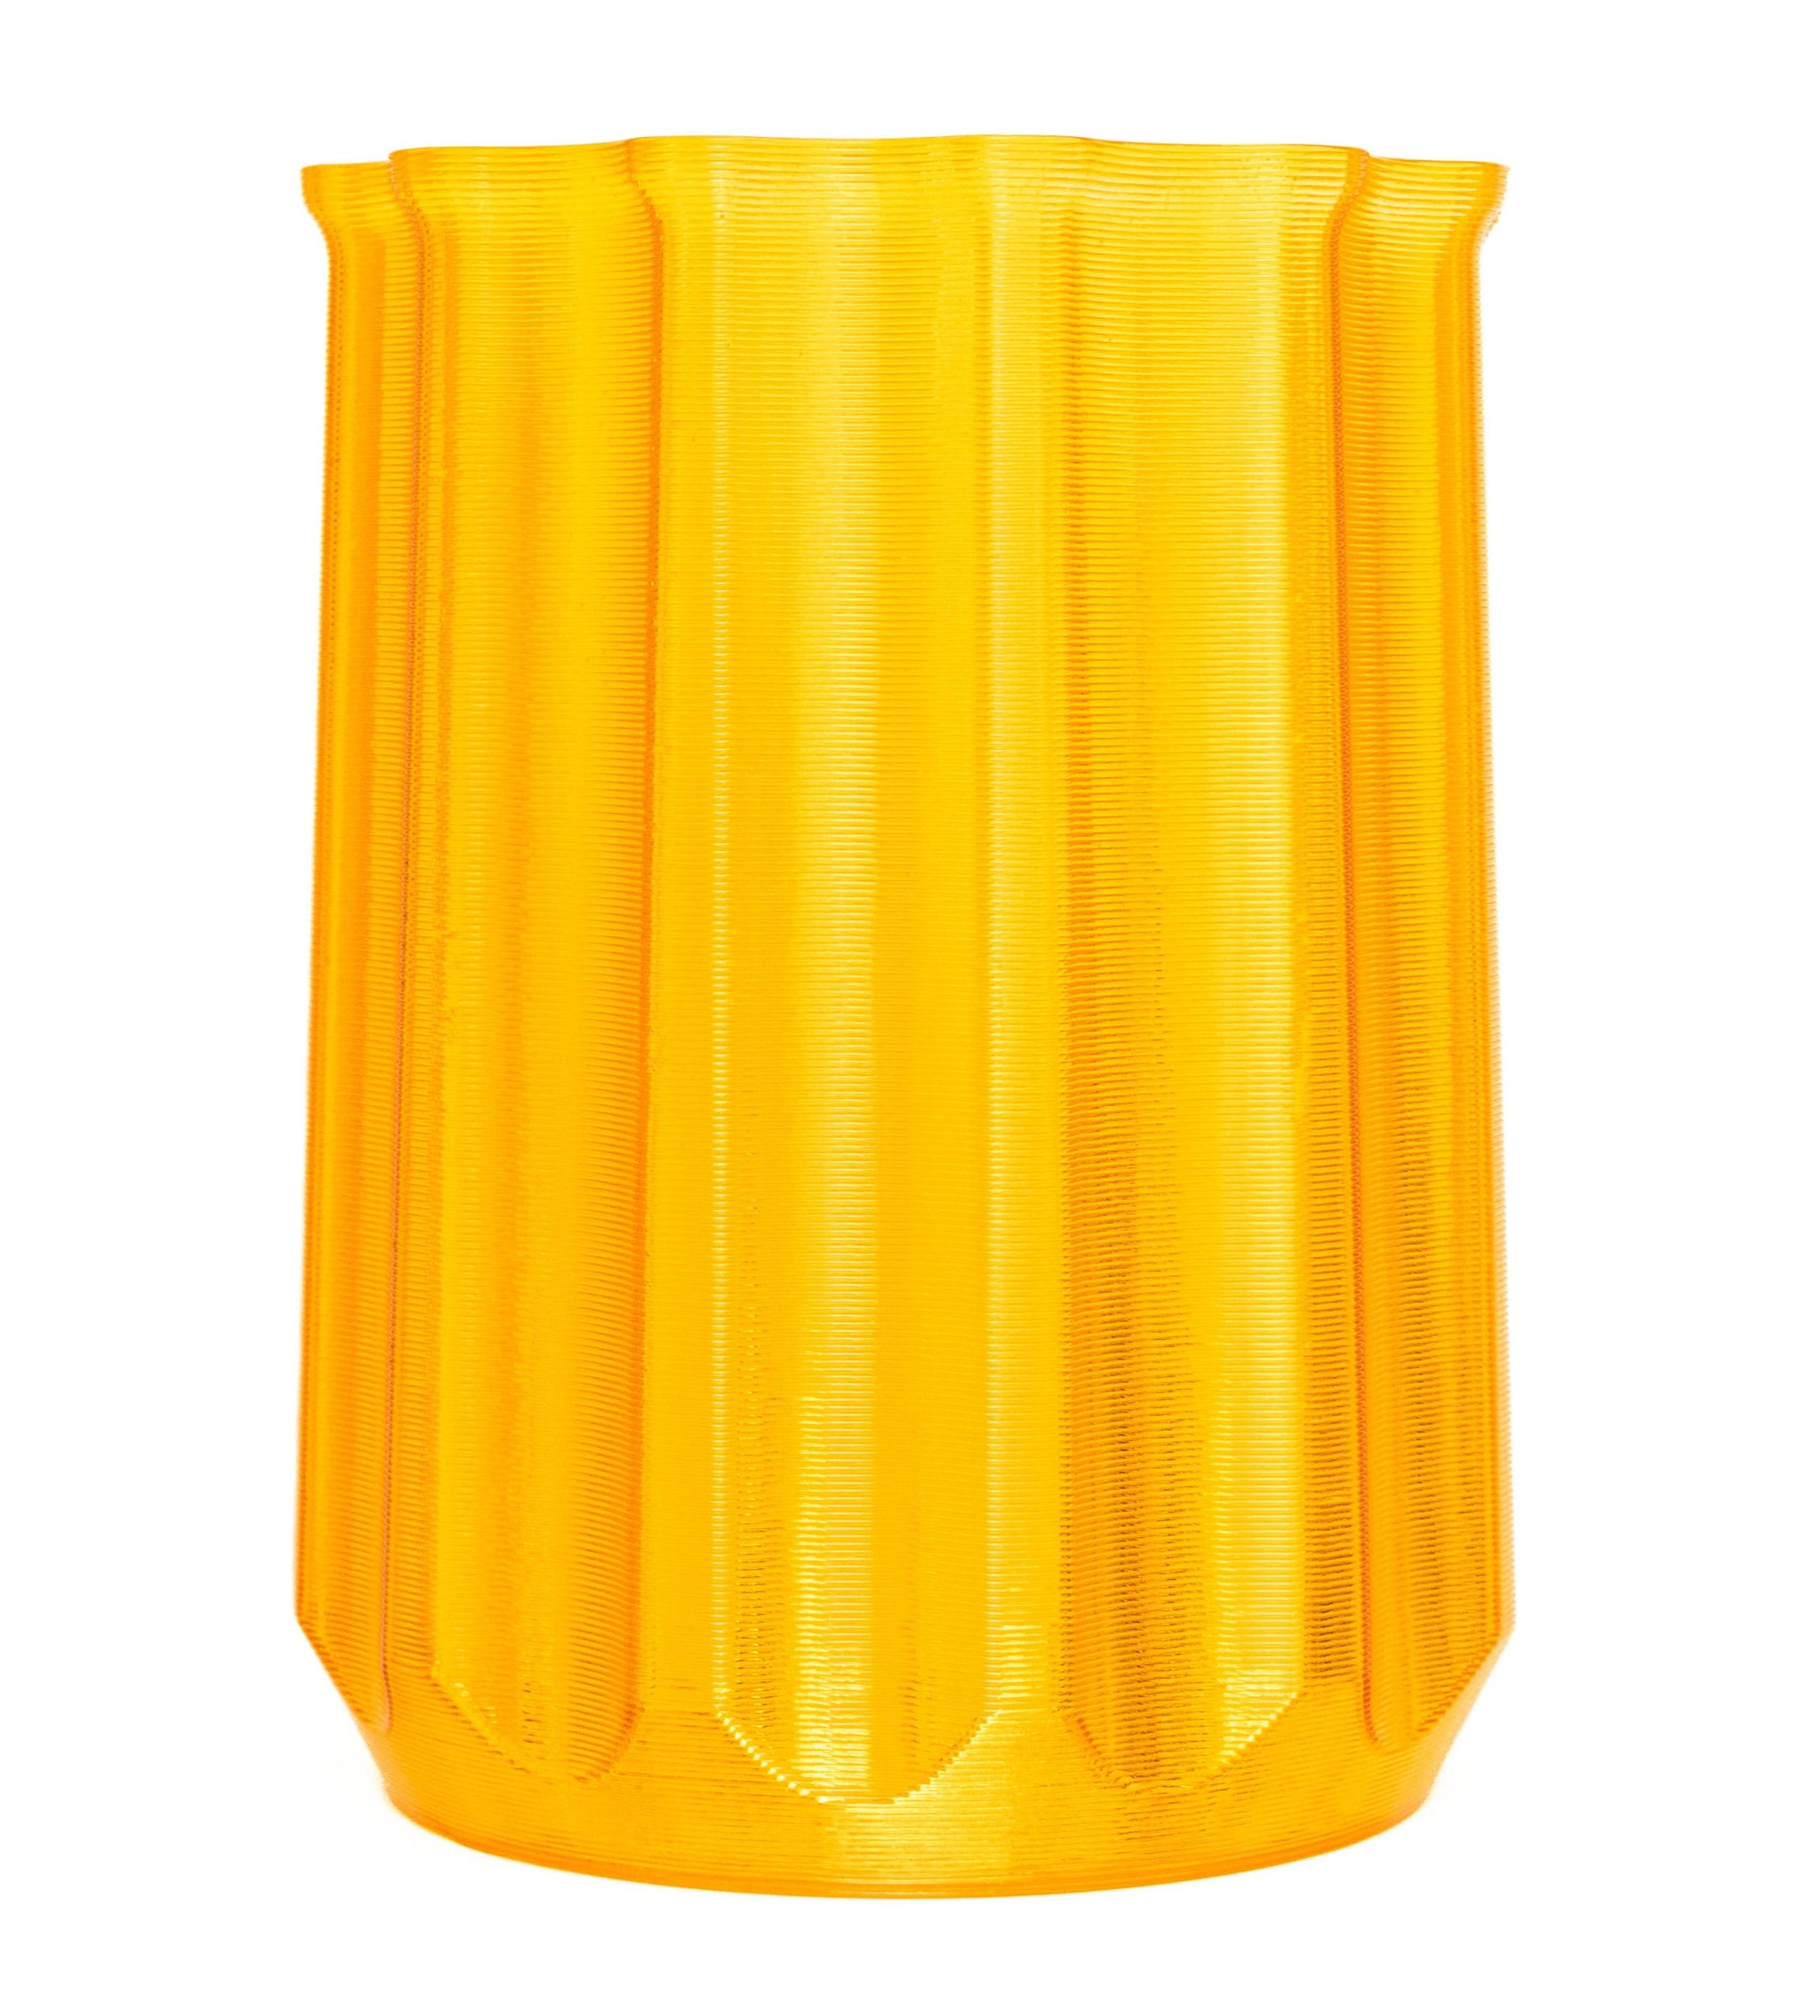 3D Waste basket Semi-Transparent Yellow Floral